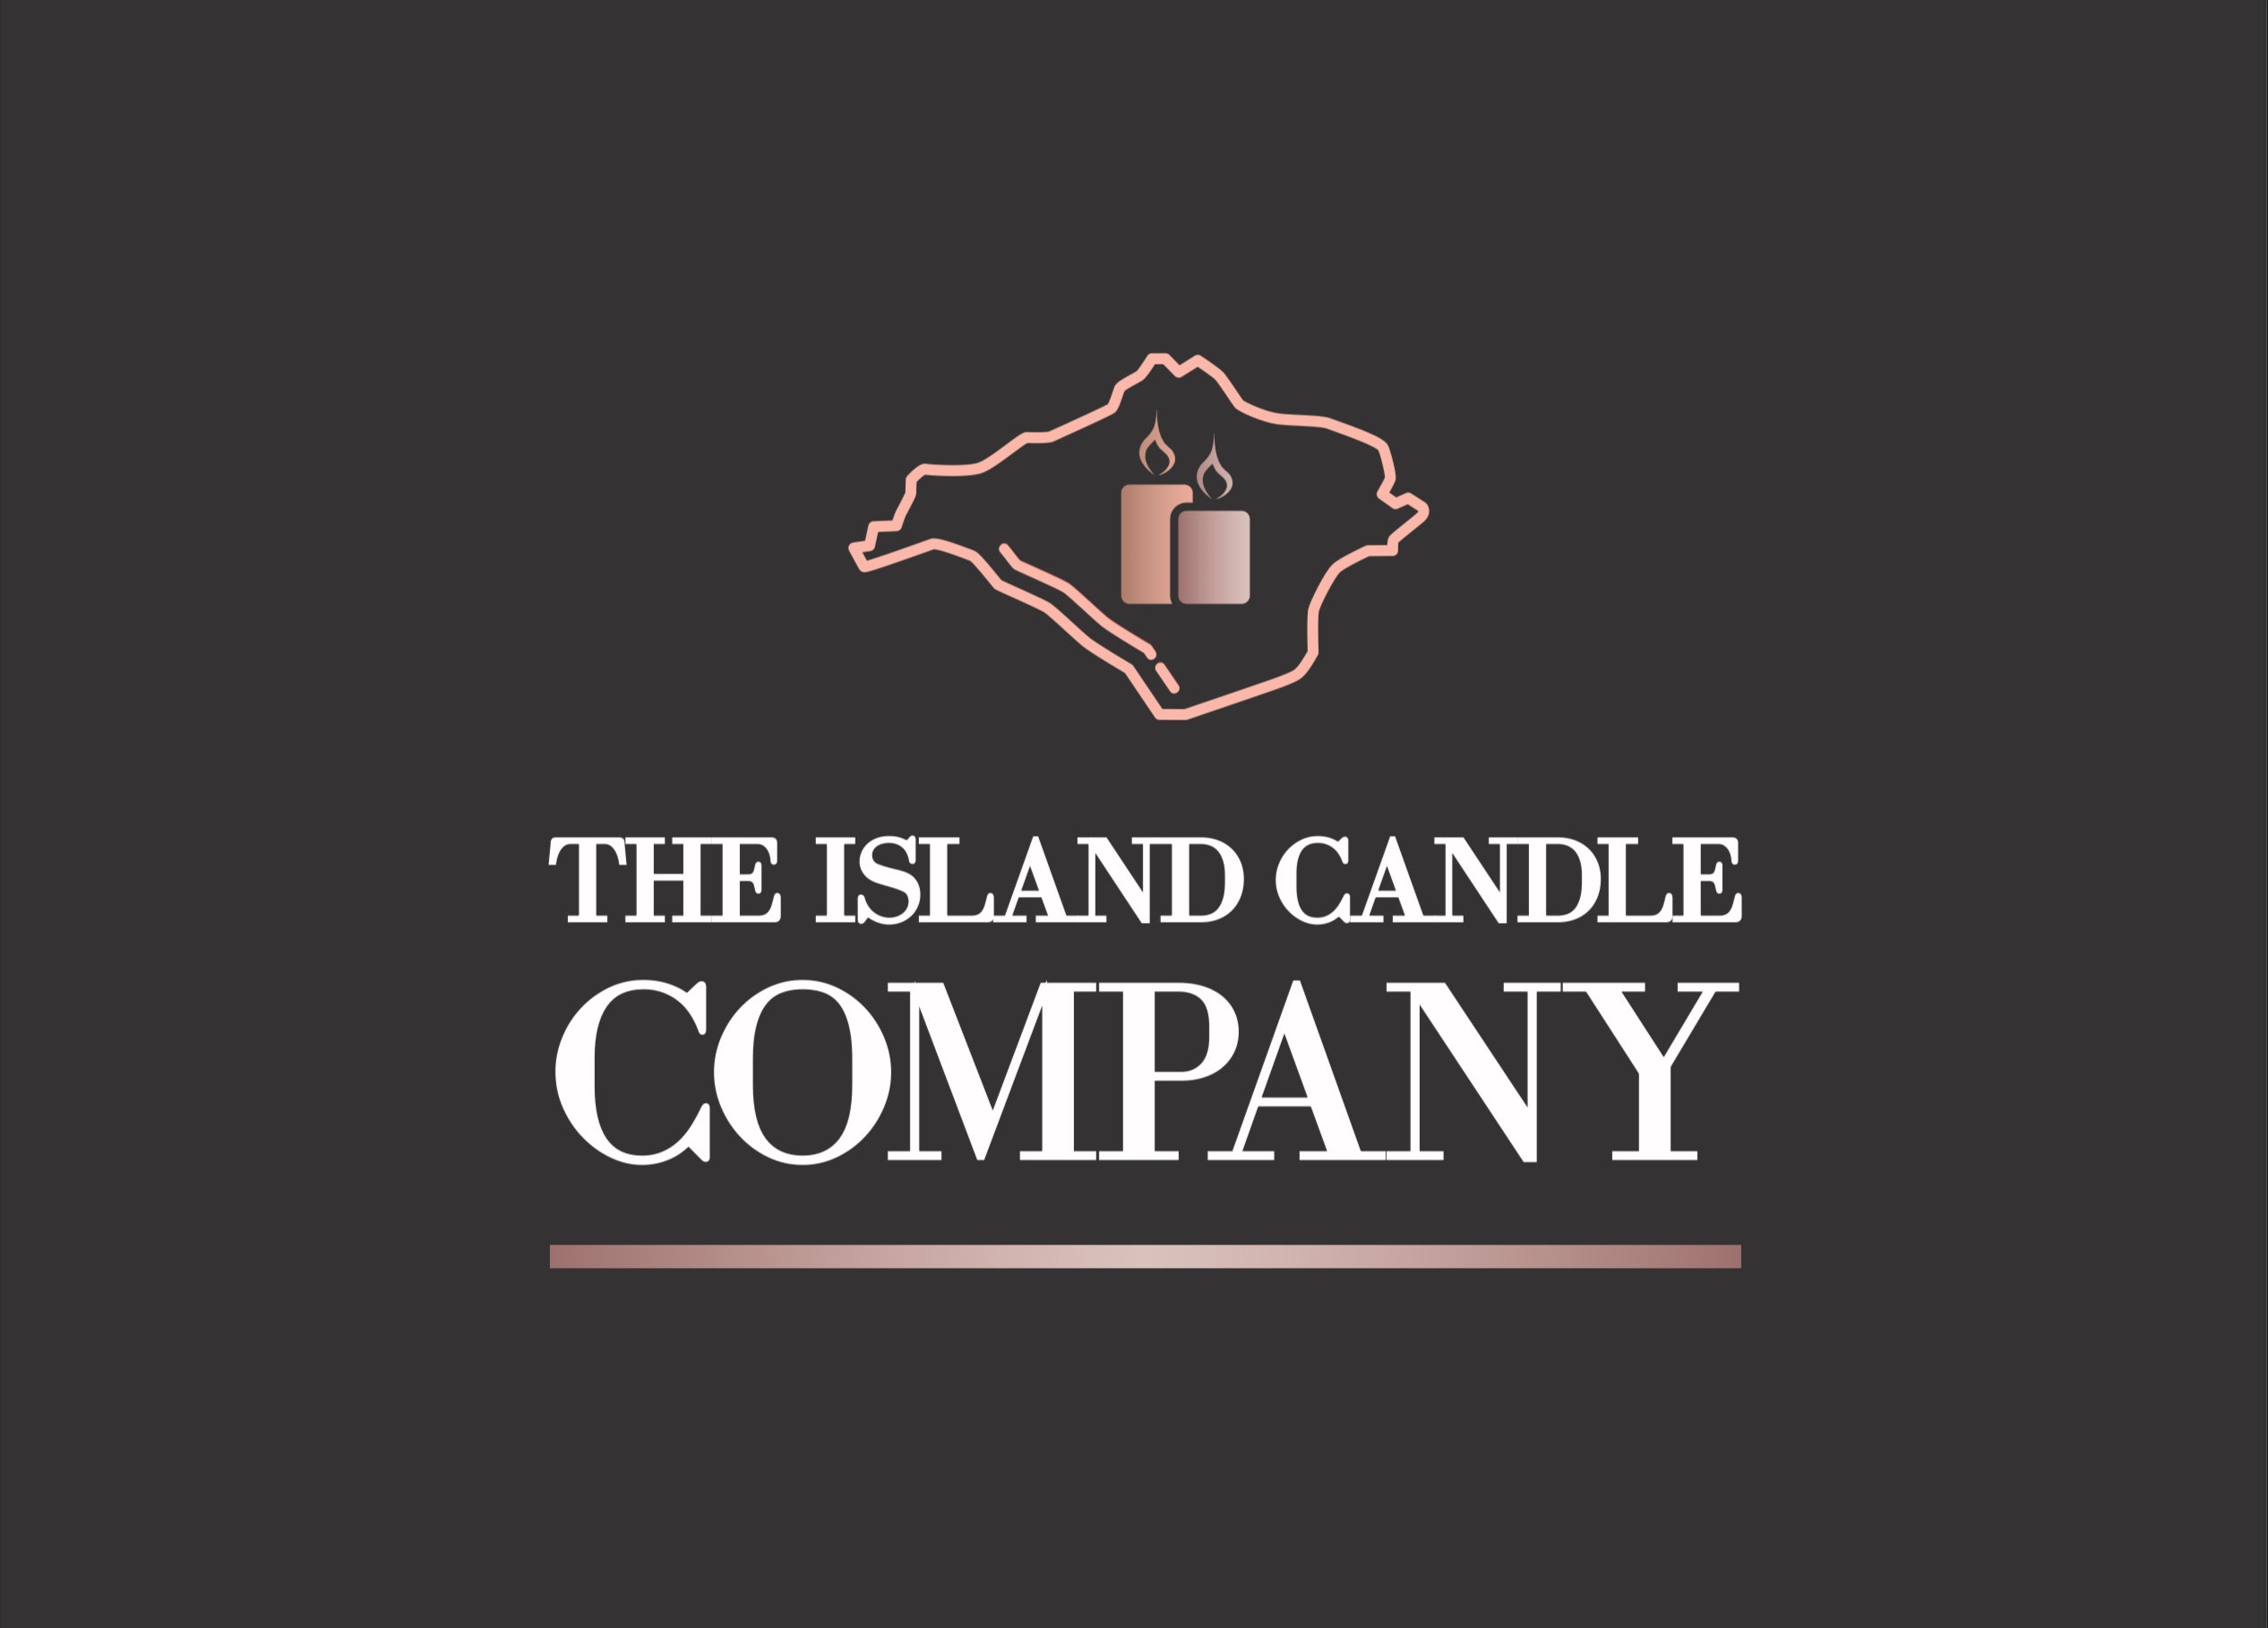 The Island Candle Company